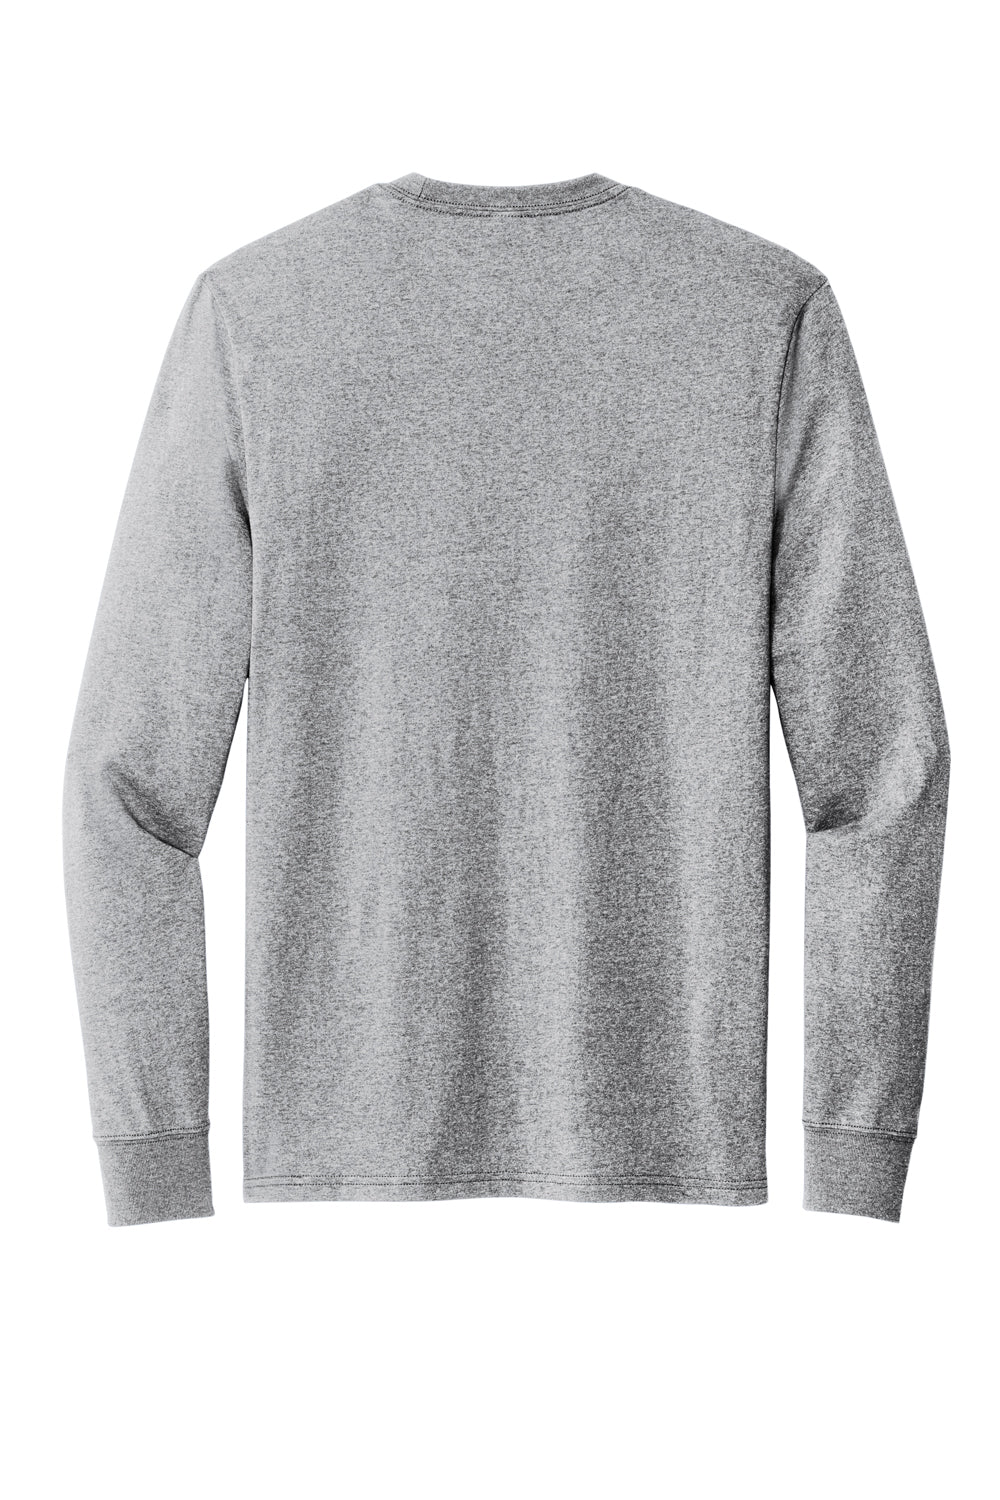 Allmade AL6204 Mens Recycled Long Sleeve Crewneck T-Shirt Heather Remade Grey Flat Back